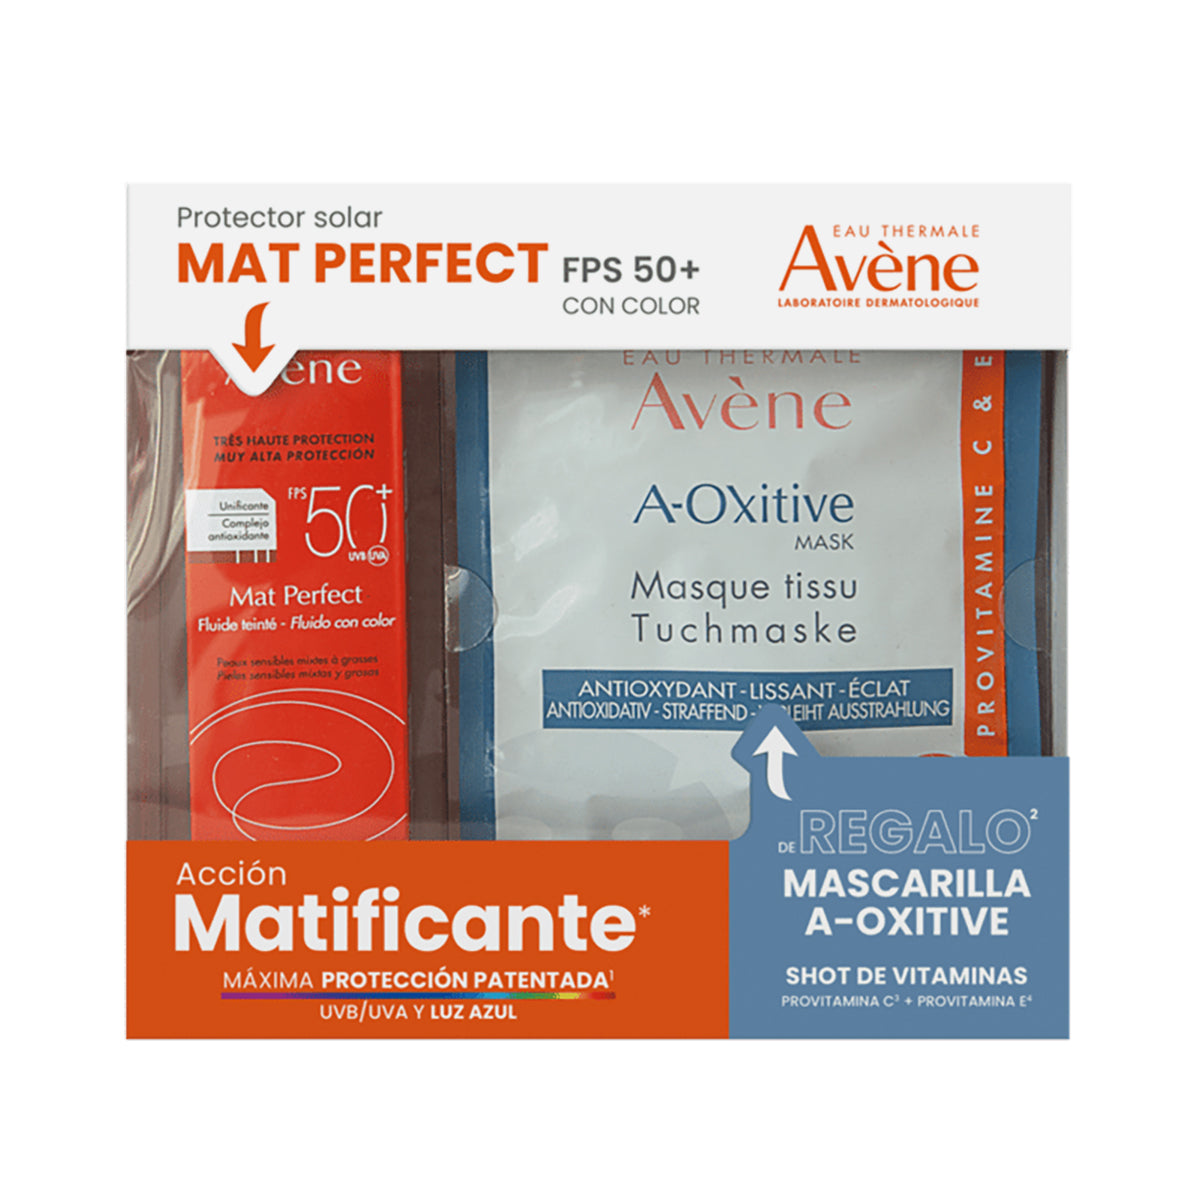 Avene Kit protector solar mat perfect 50ml + Mascarilla a-oxitive 18ml.